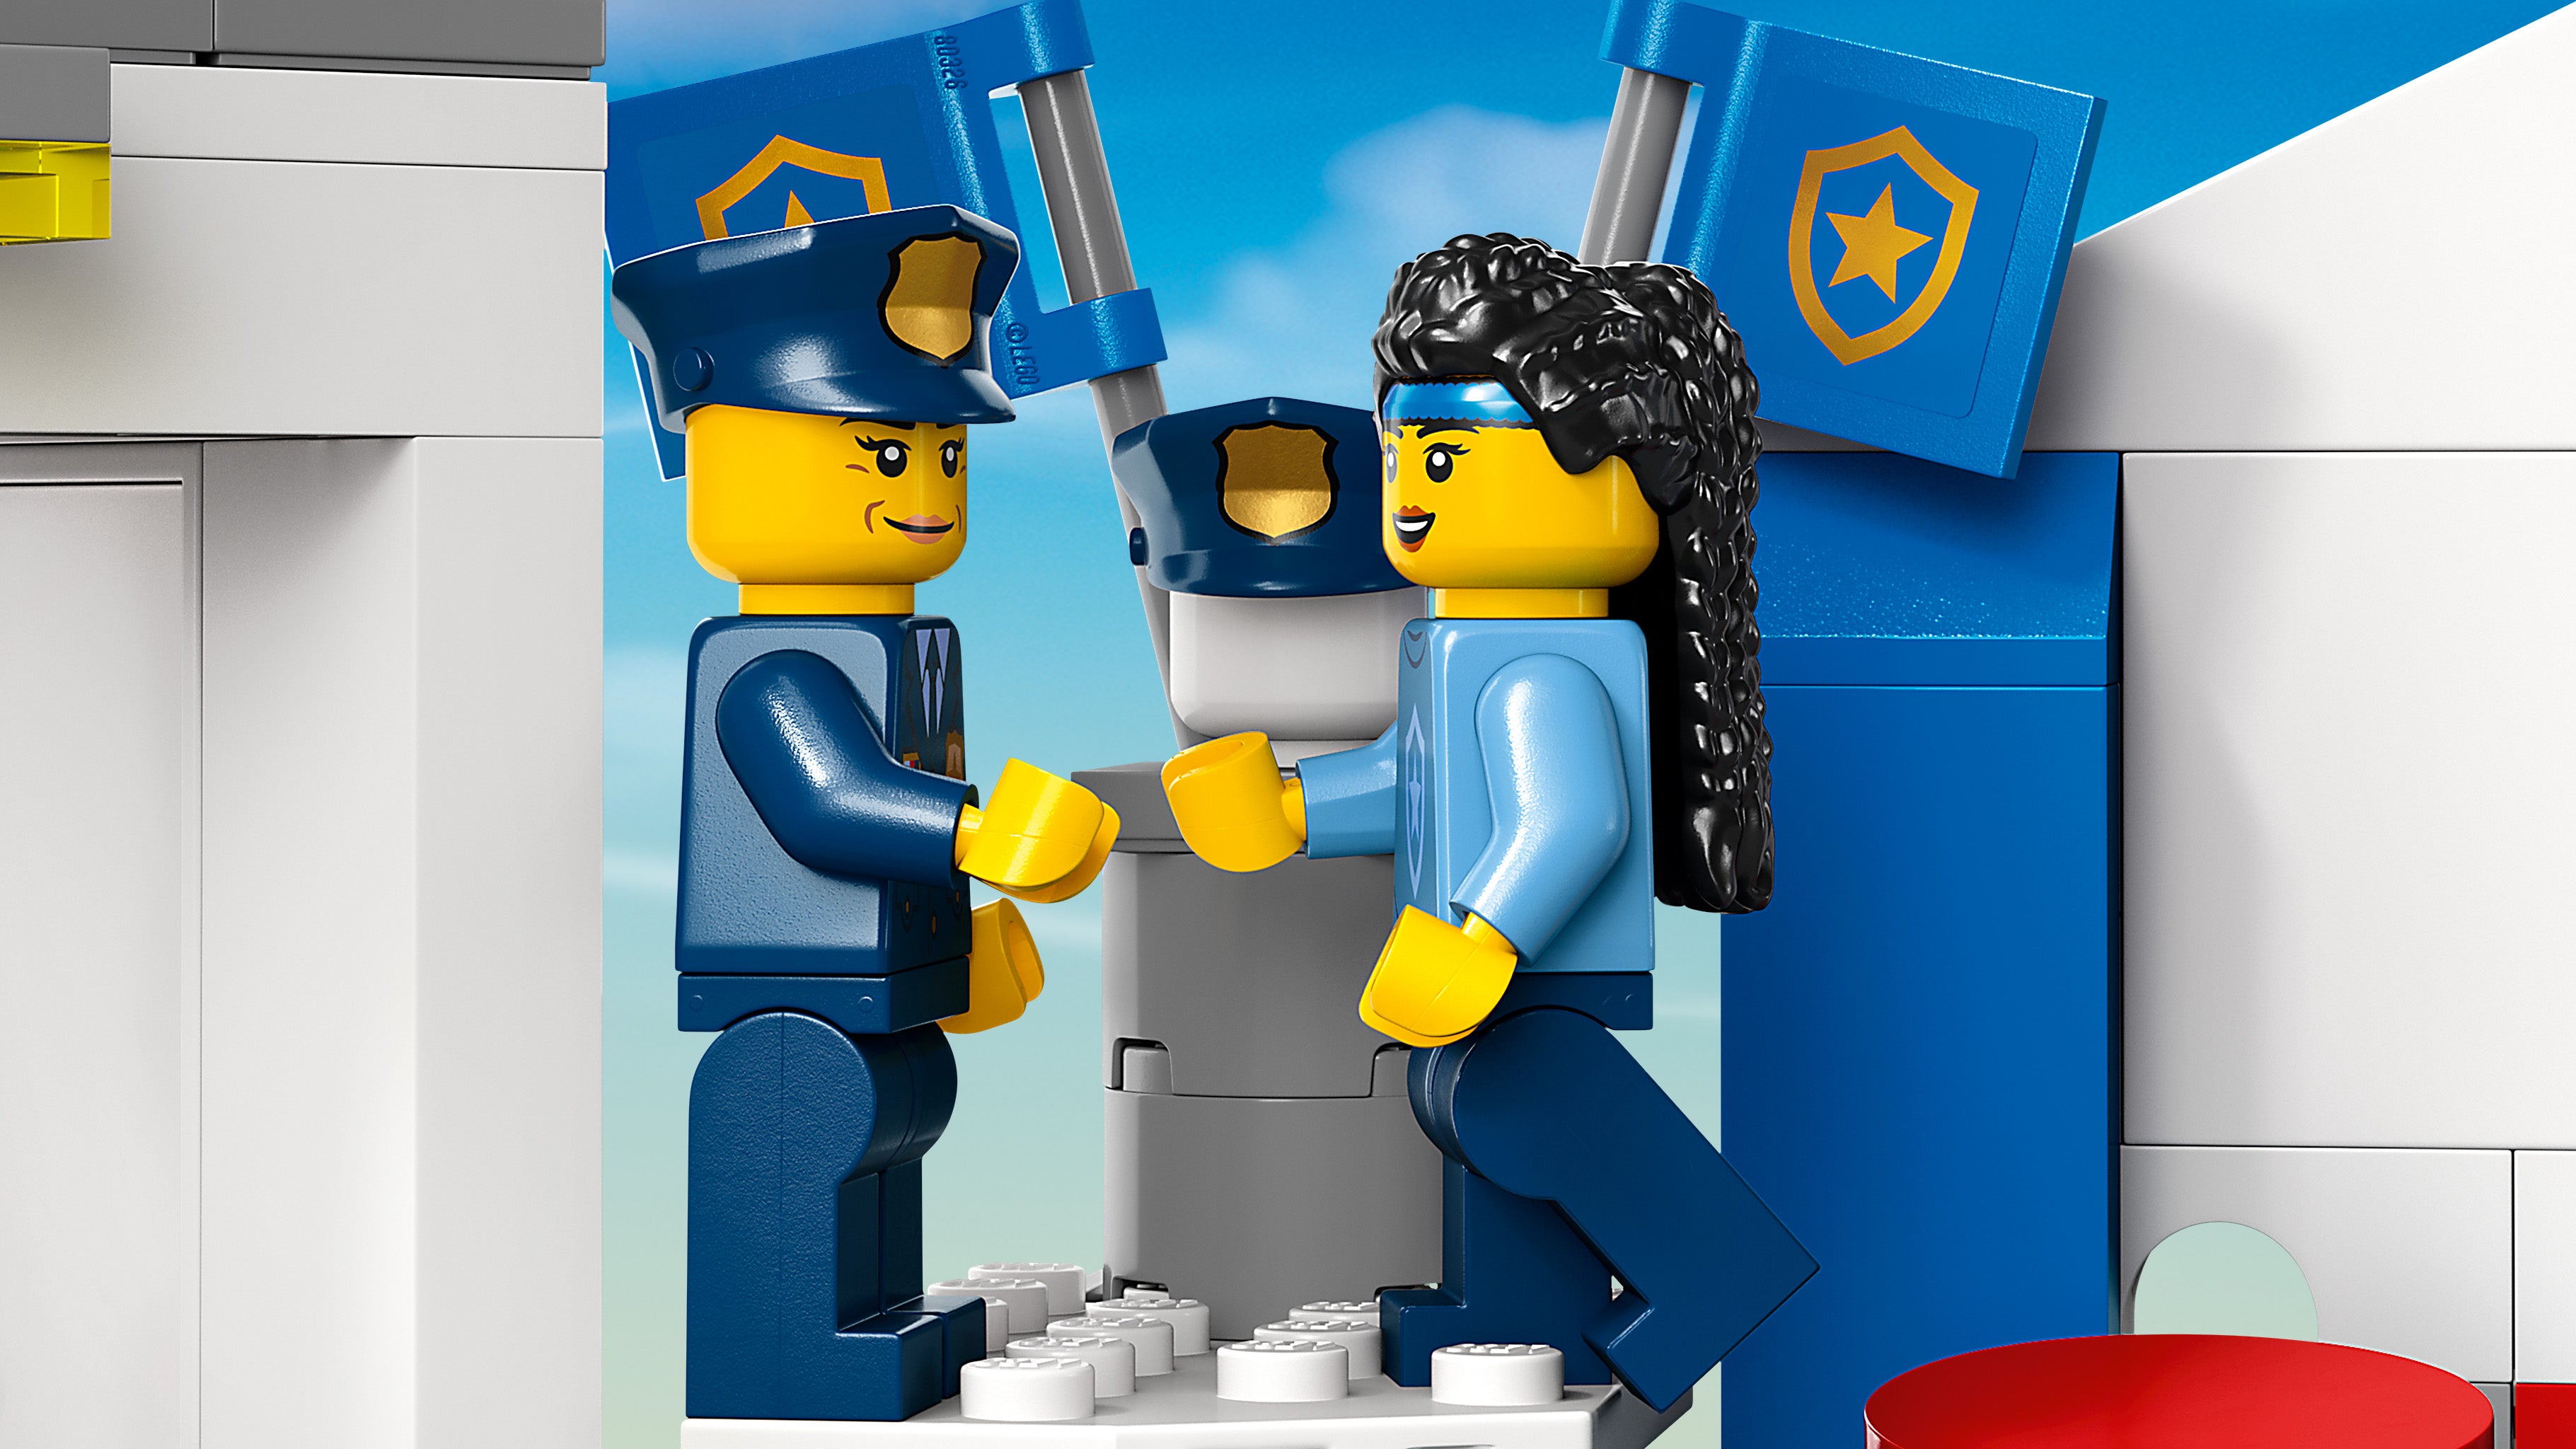 Lego 60372 Police Training Academy